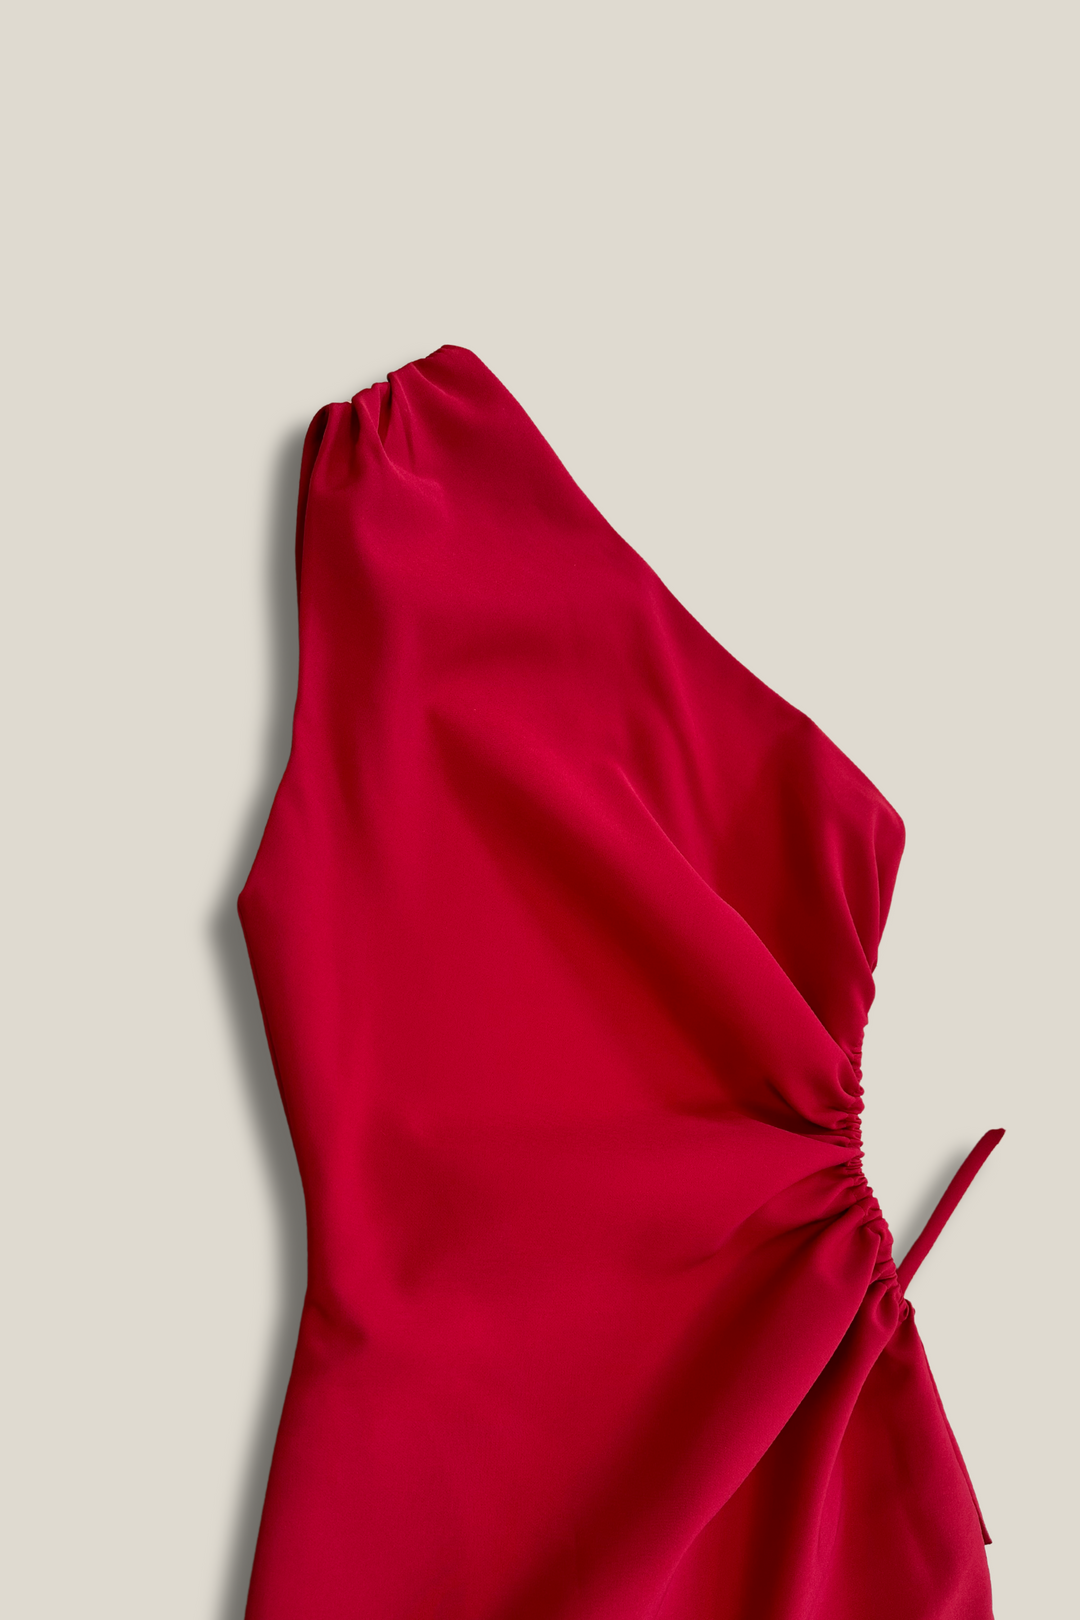 MELBOURNE RED DRESS